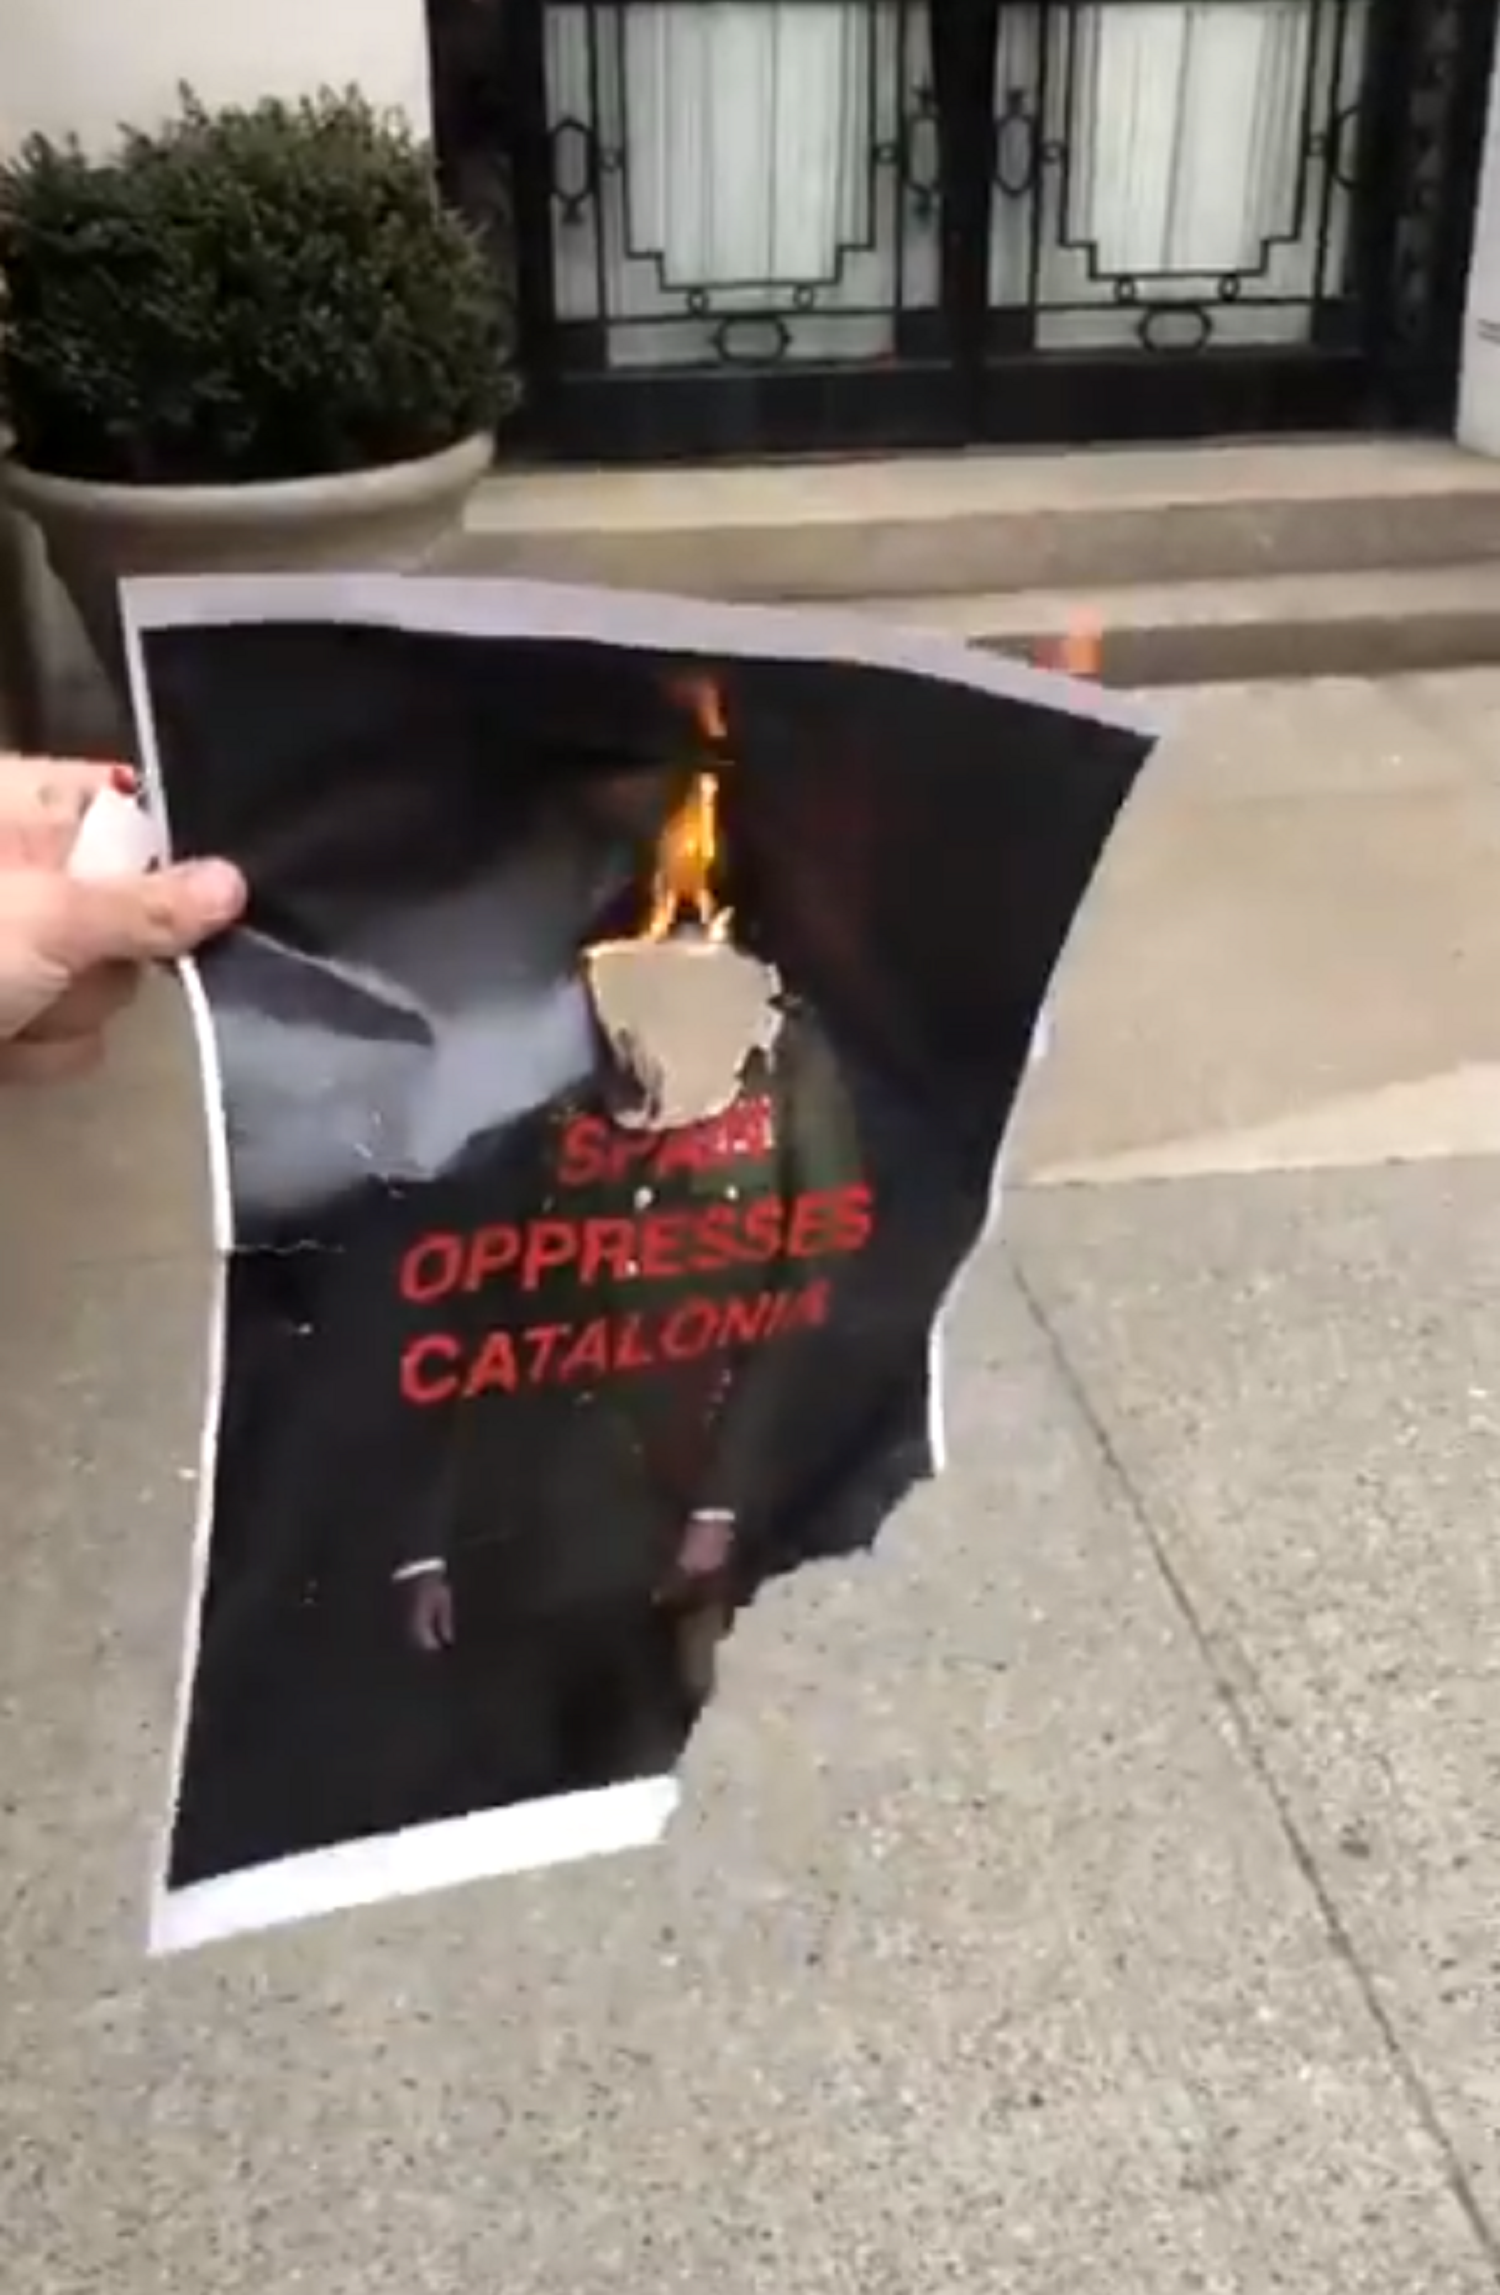 Cremen fotos del Rei davant la residència oficial de Moragas a Nova York